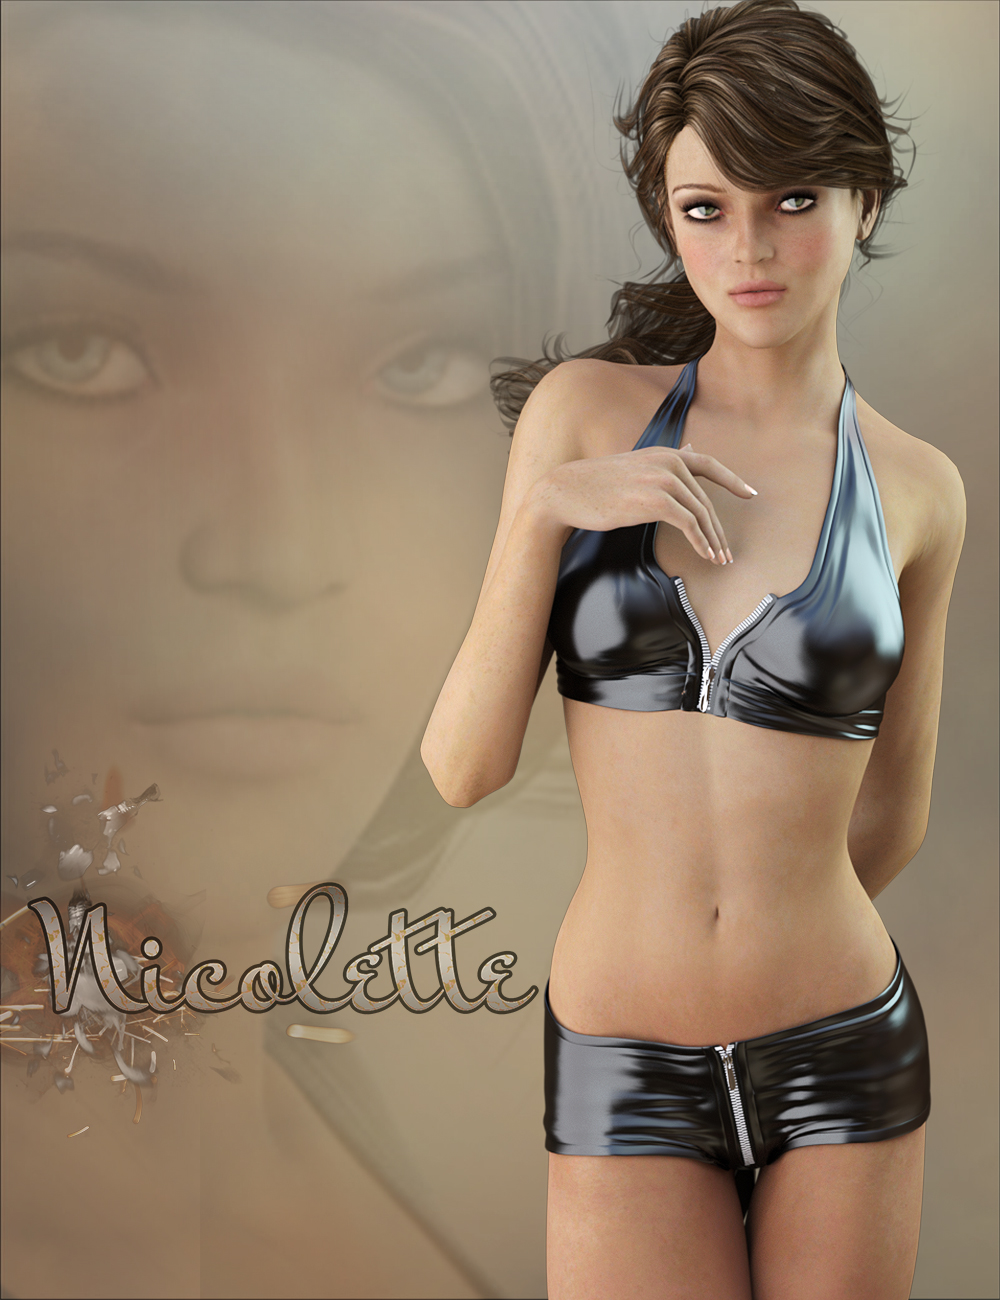 LY Nicolette by: Lyoness, 3D Models by Daz 3D